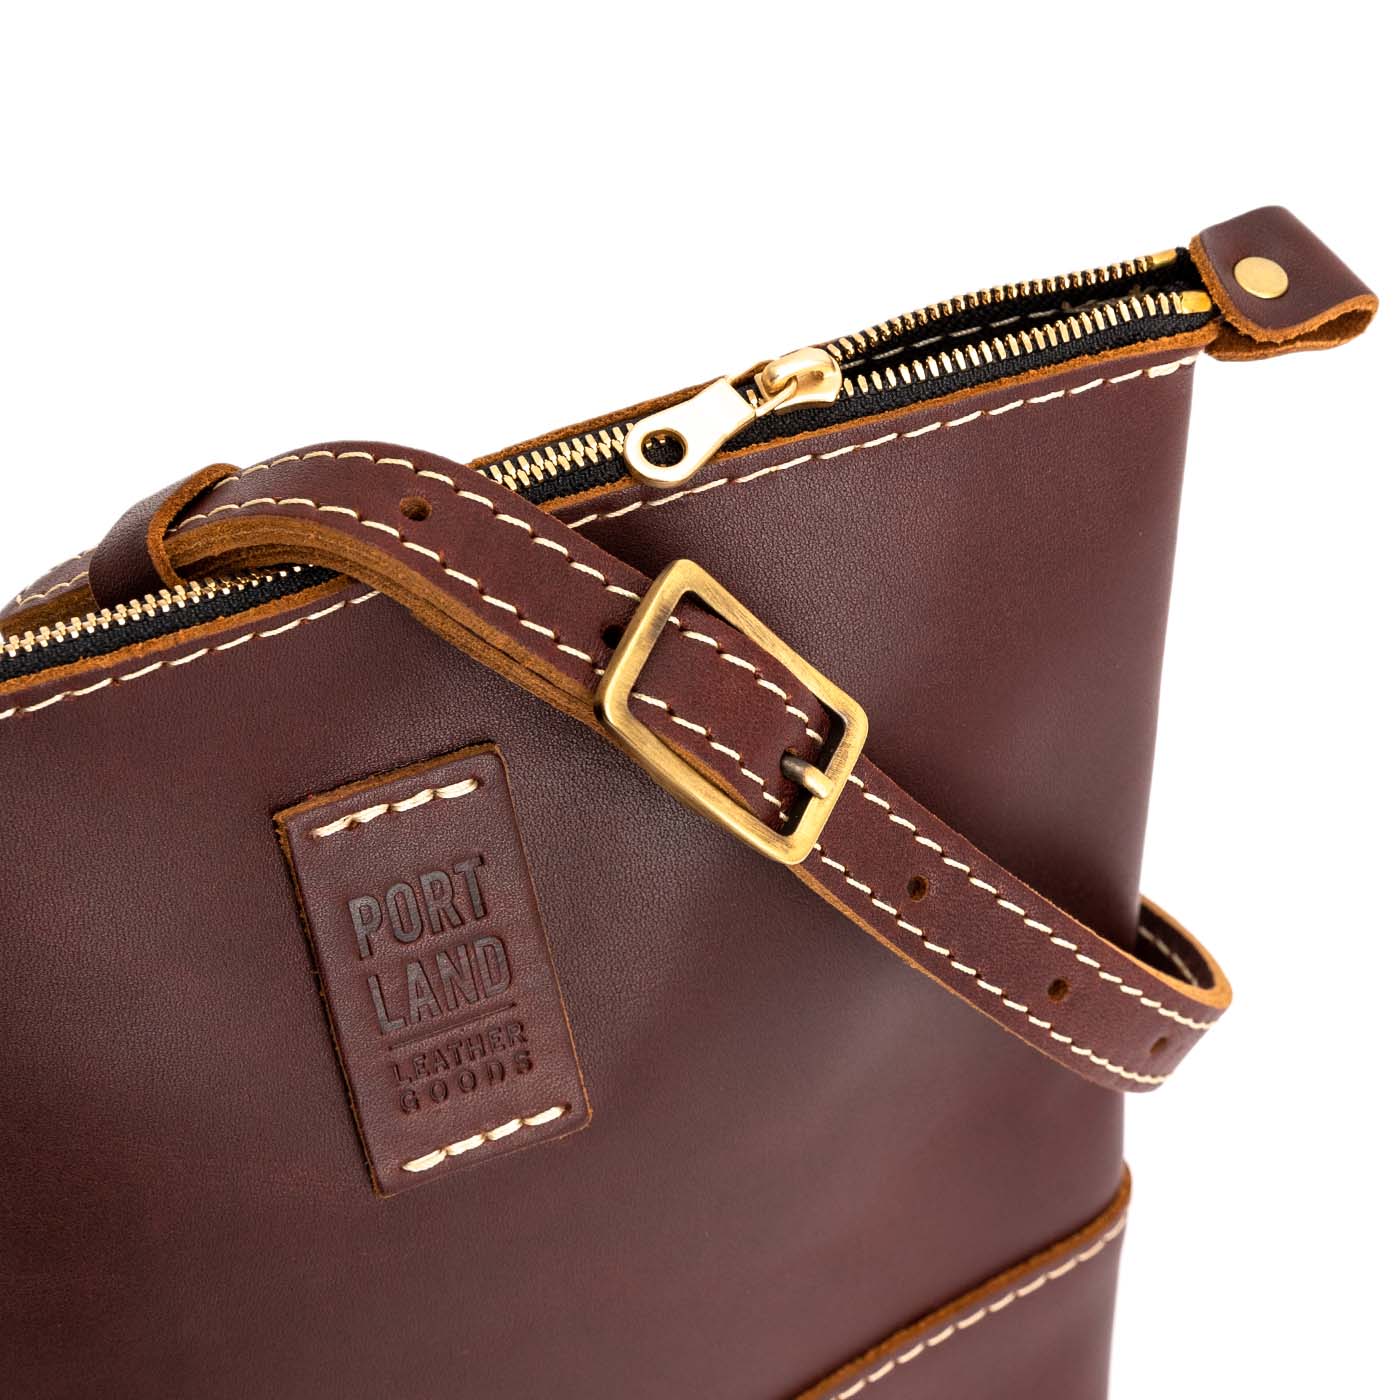 All Color: Cognac| handmade leather crossbody purse